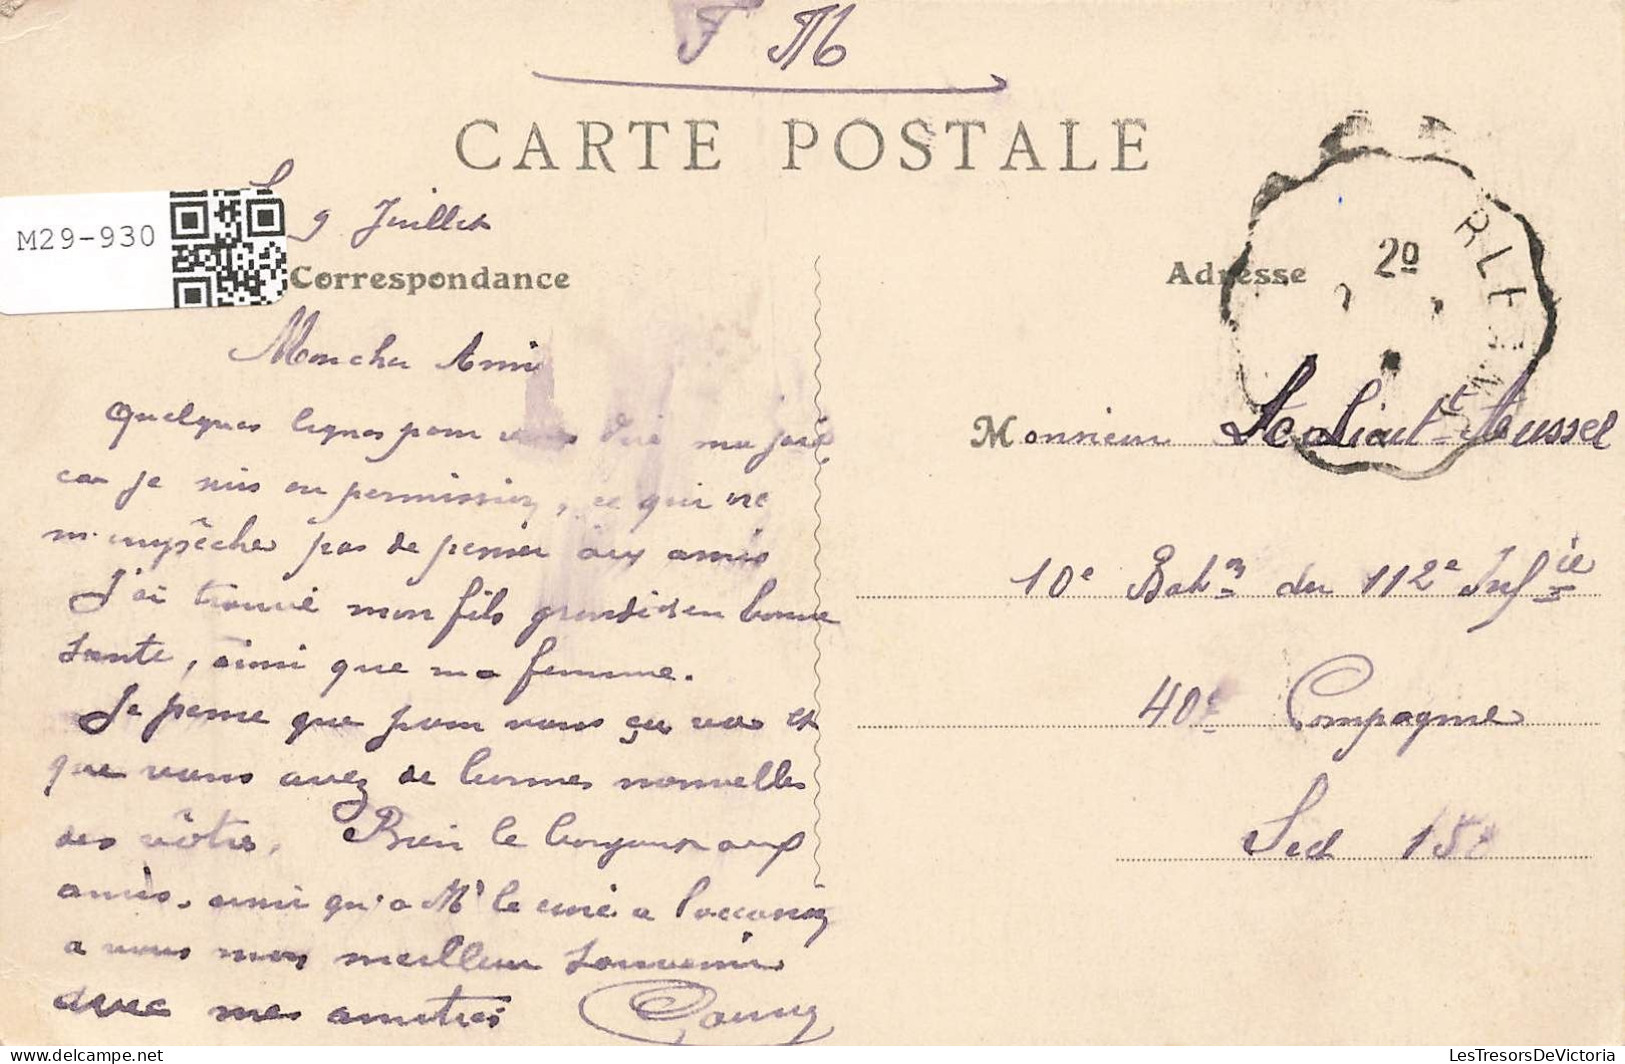 FRANCE - Chambord - Le Château - Carte Postale Ancienne - Chambord